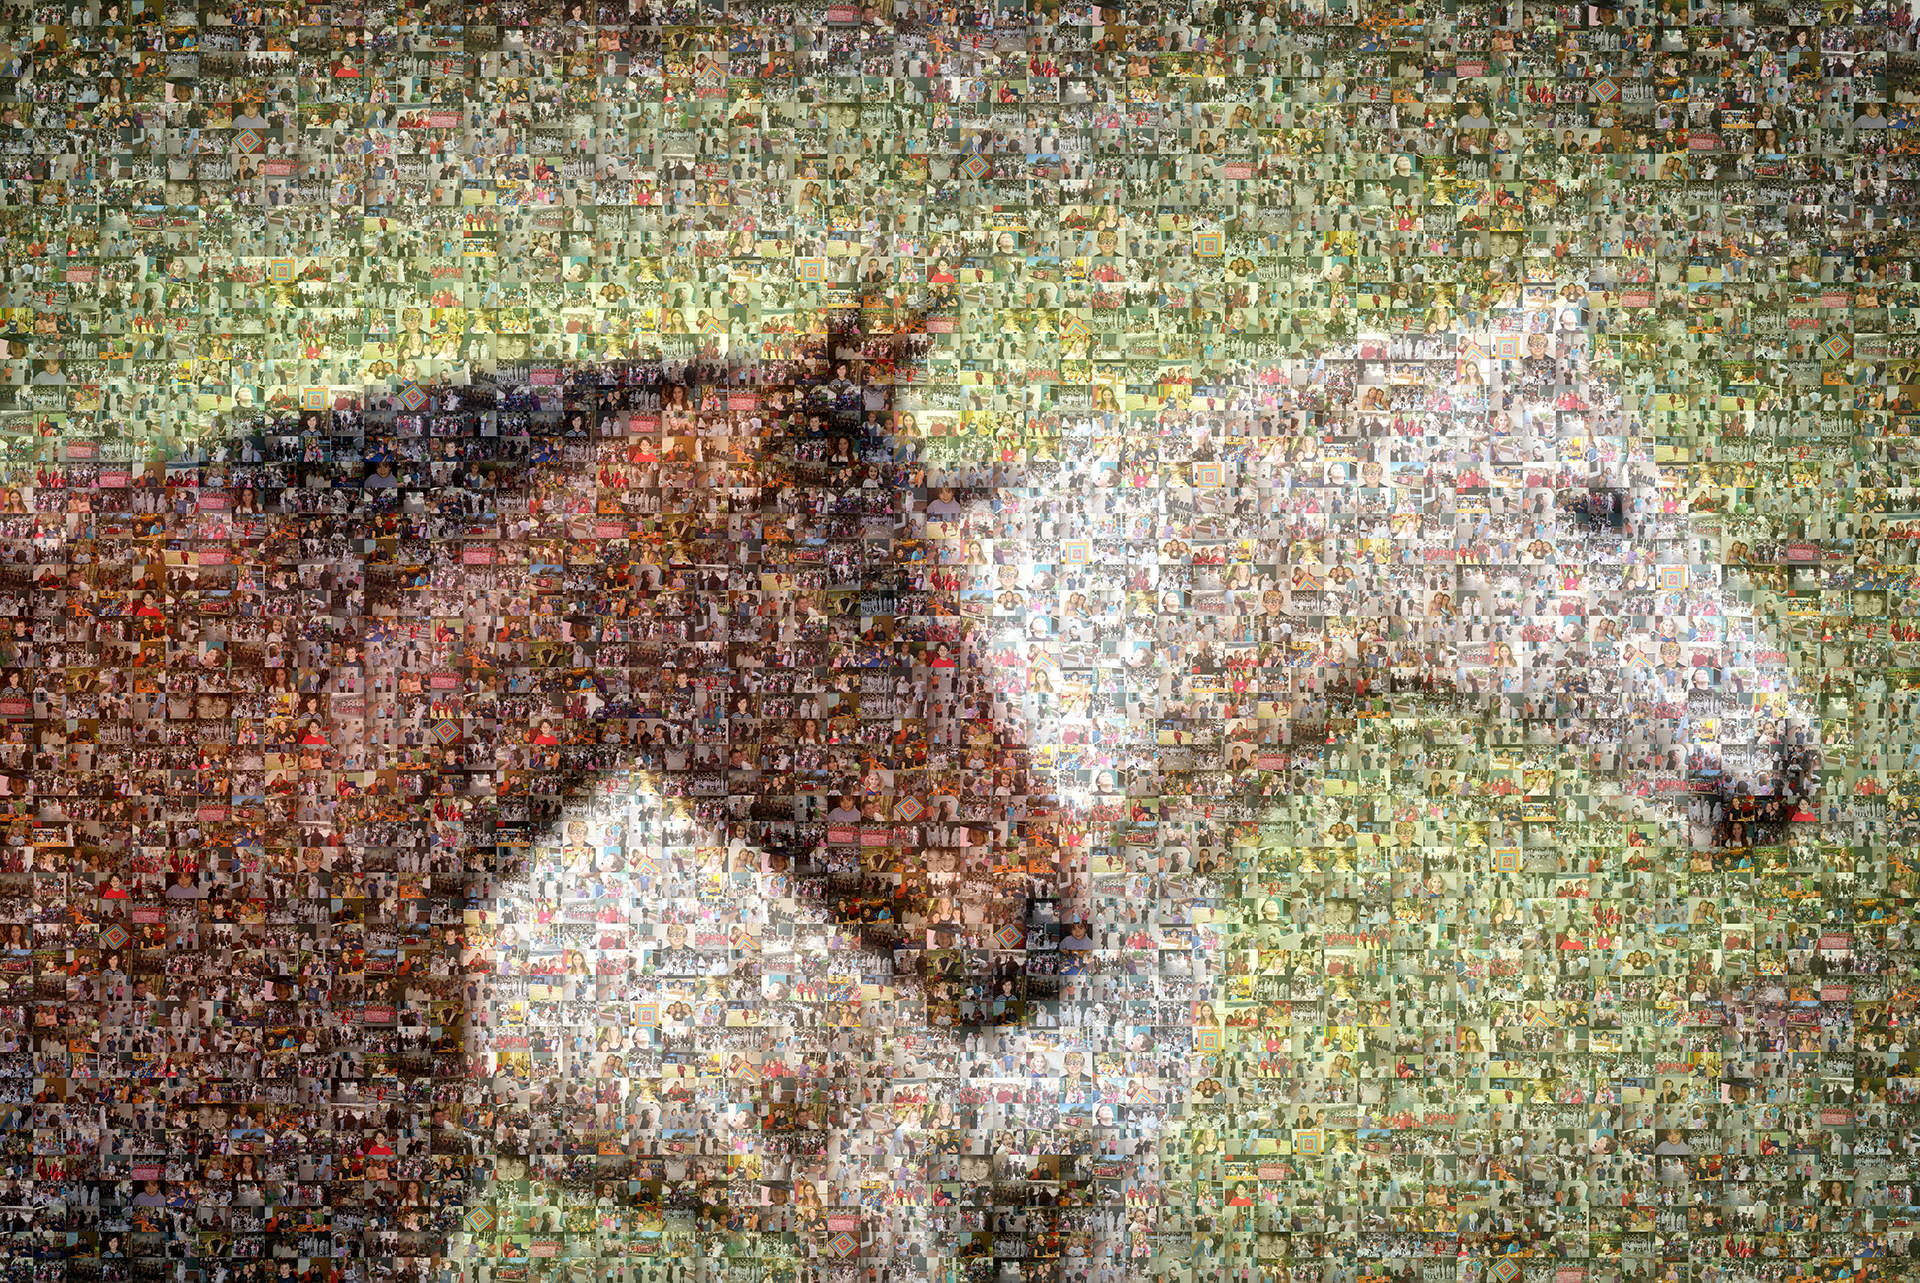 photo mosaic created using 246 student portraits